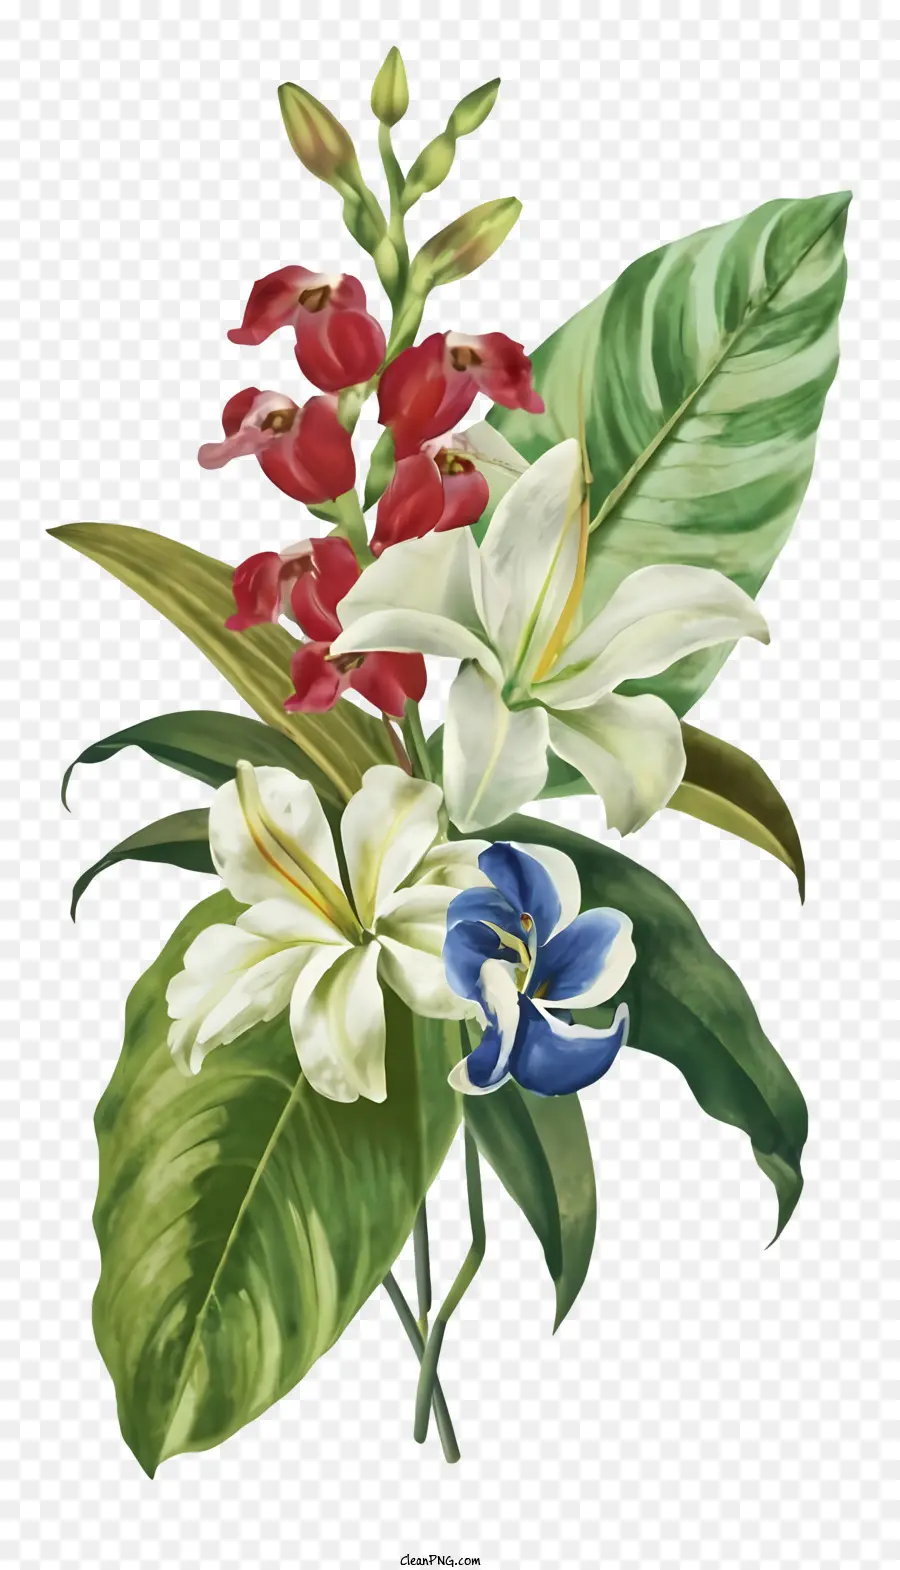 Sfondo nero blu bianco rosso bouquet - Bouquet di fiori rossi, bianchi e blu in vaso